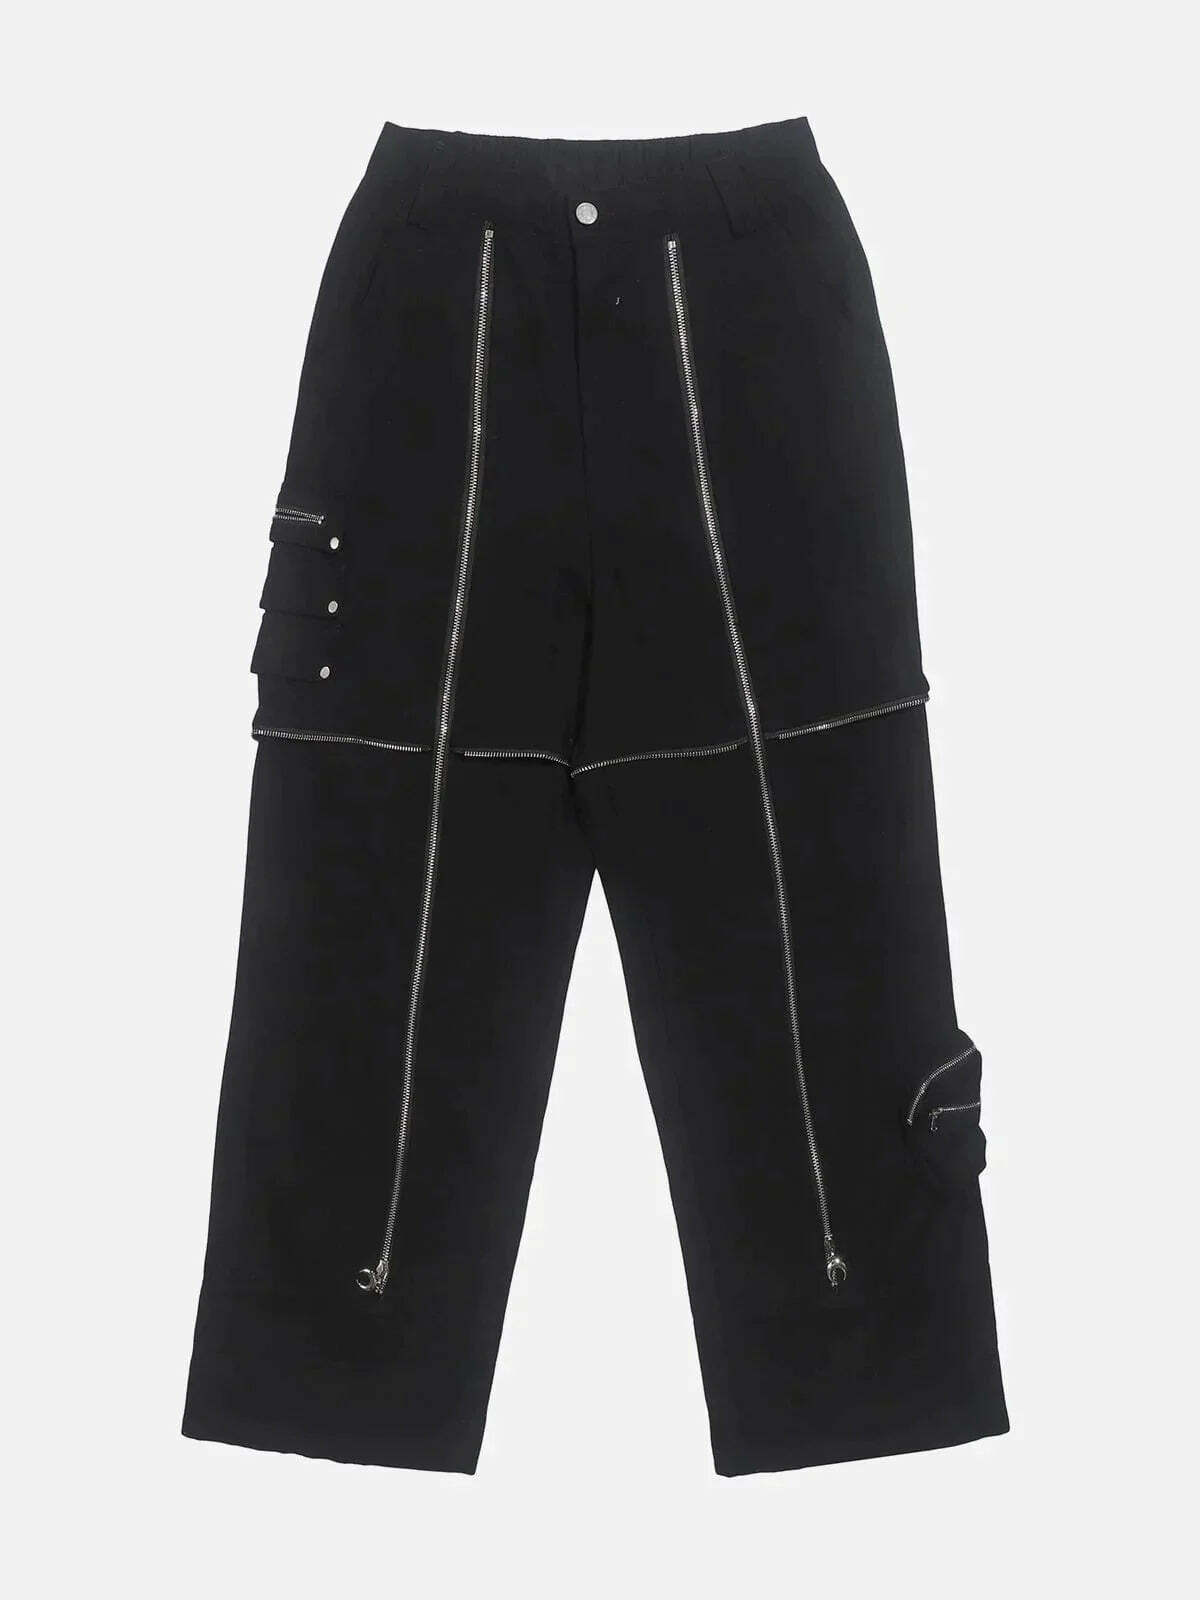 loose pants with zipper detail edgy & versatile streetwear 6663